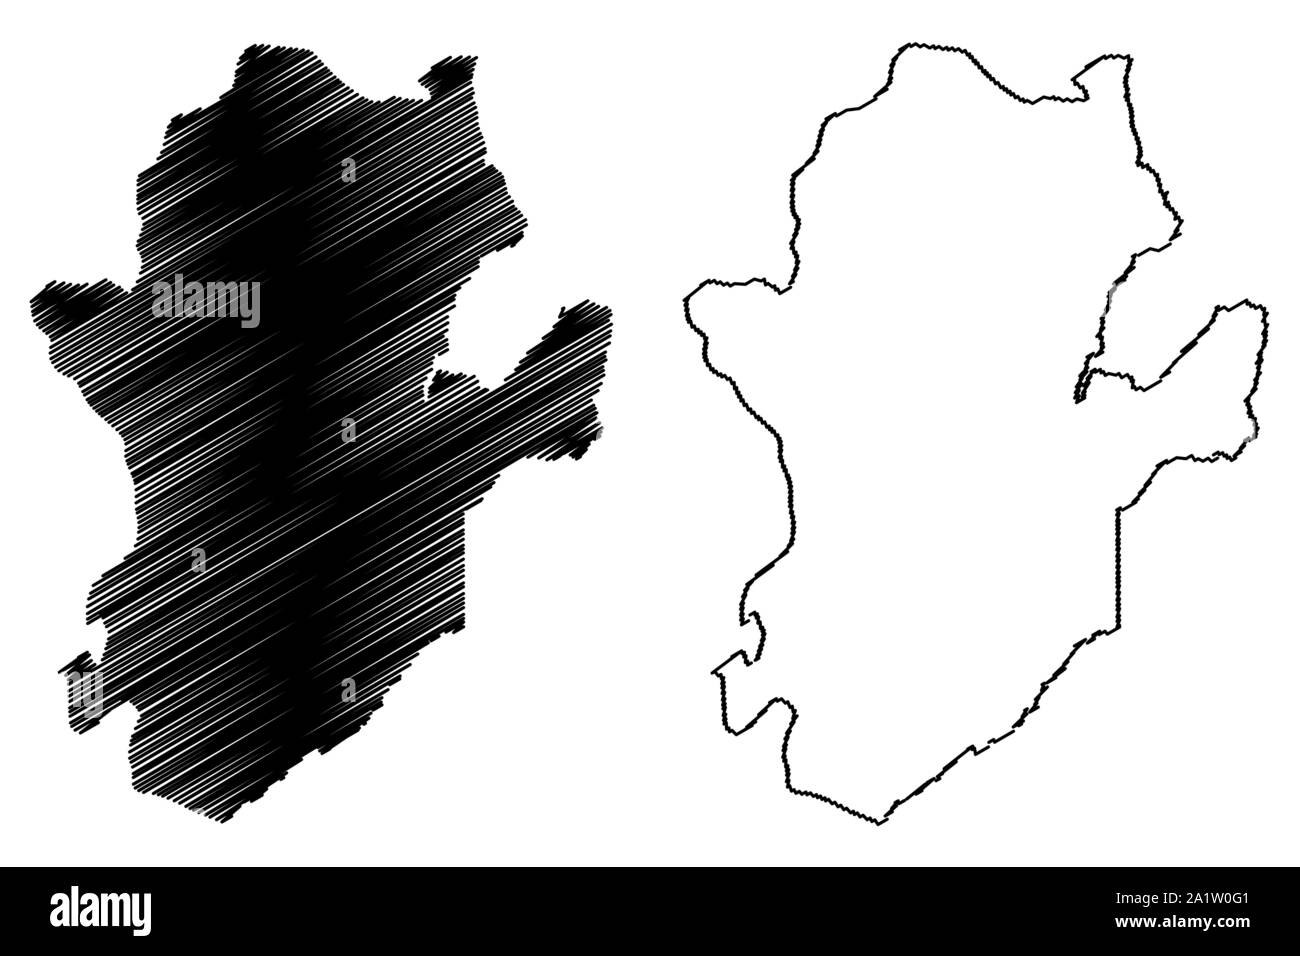 Östlichen Provinz (Republik Sierra Leone, Salone) Karte Vektor-illustration, kritzeln Skizze östlichen Karte Stock Vektor